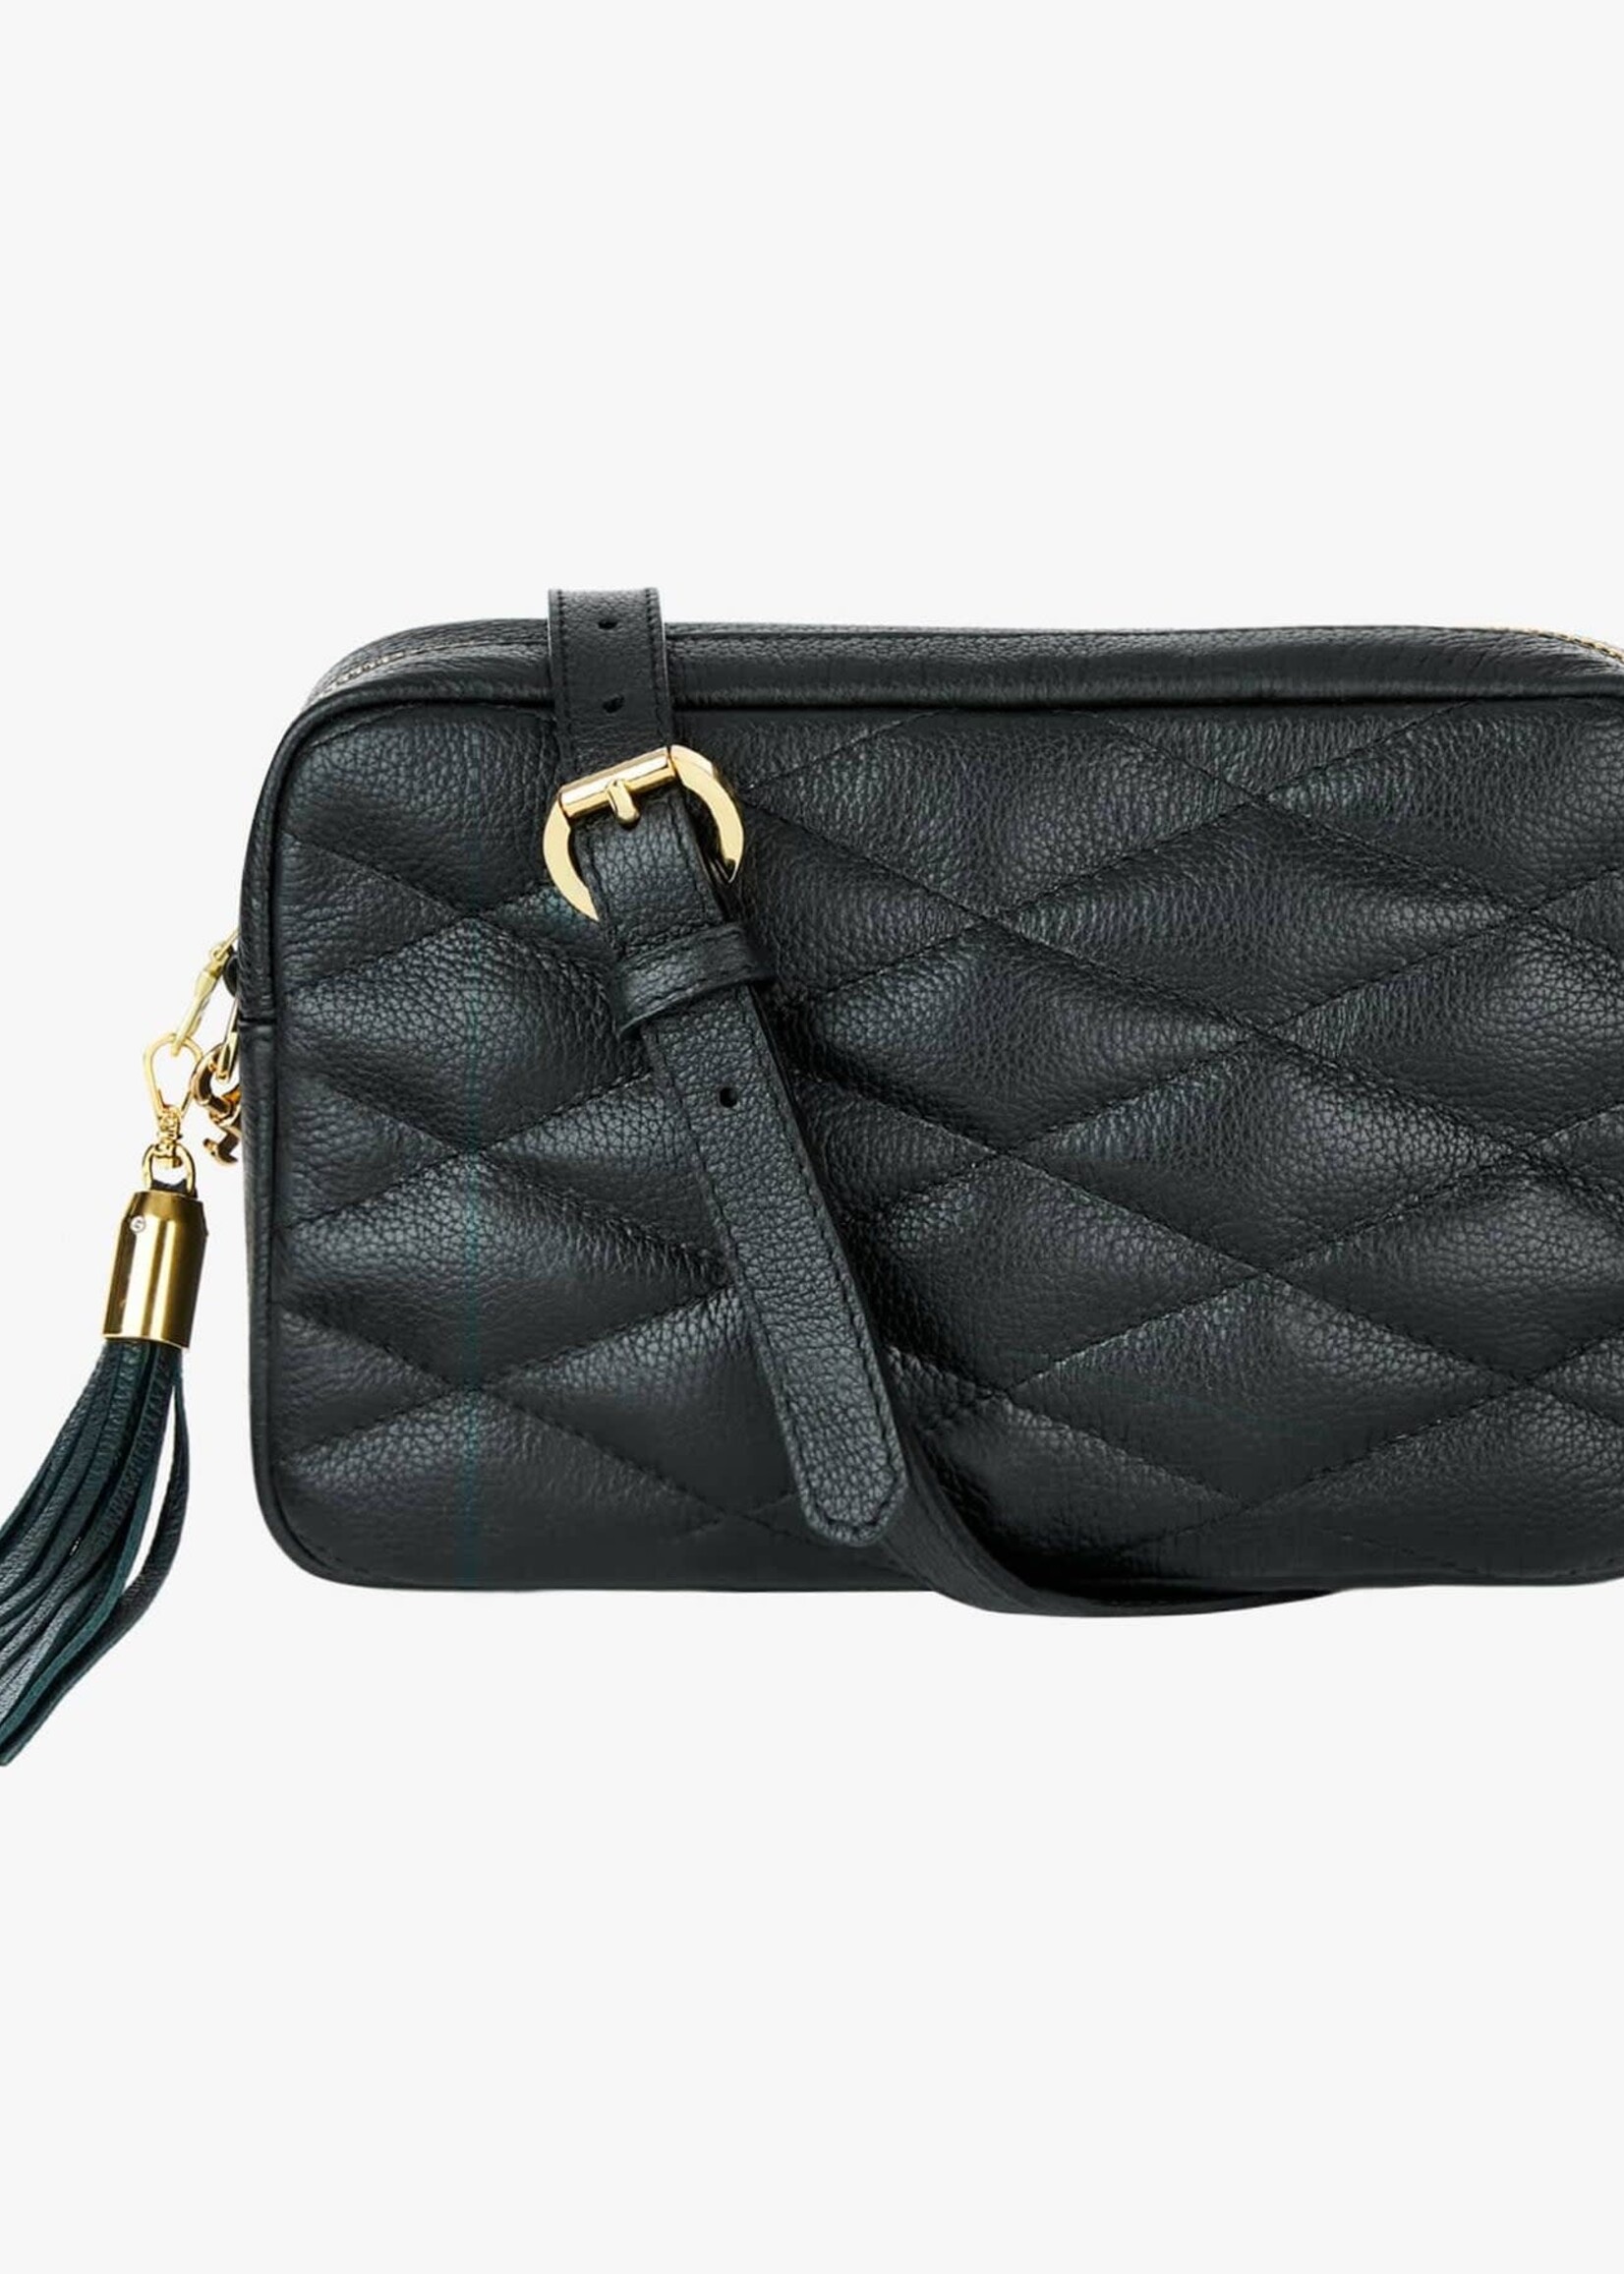 BRAVE LEATHER SONNET leather purse